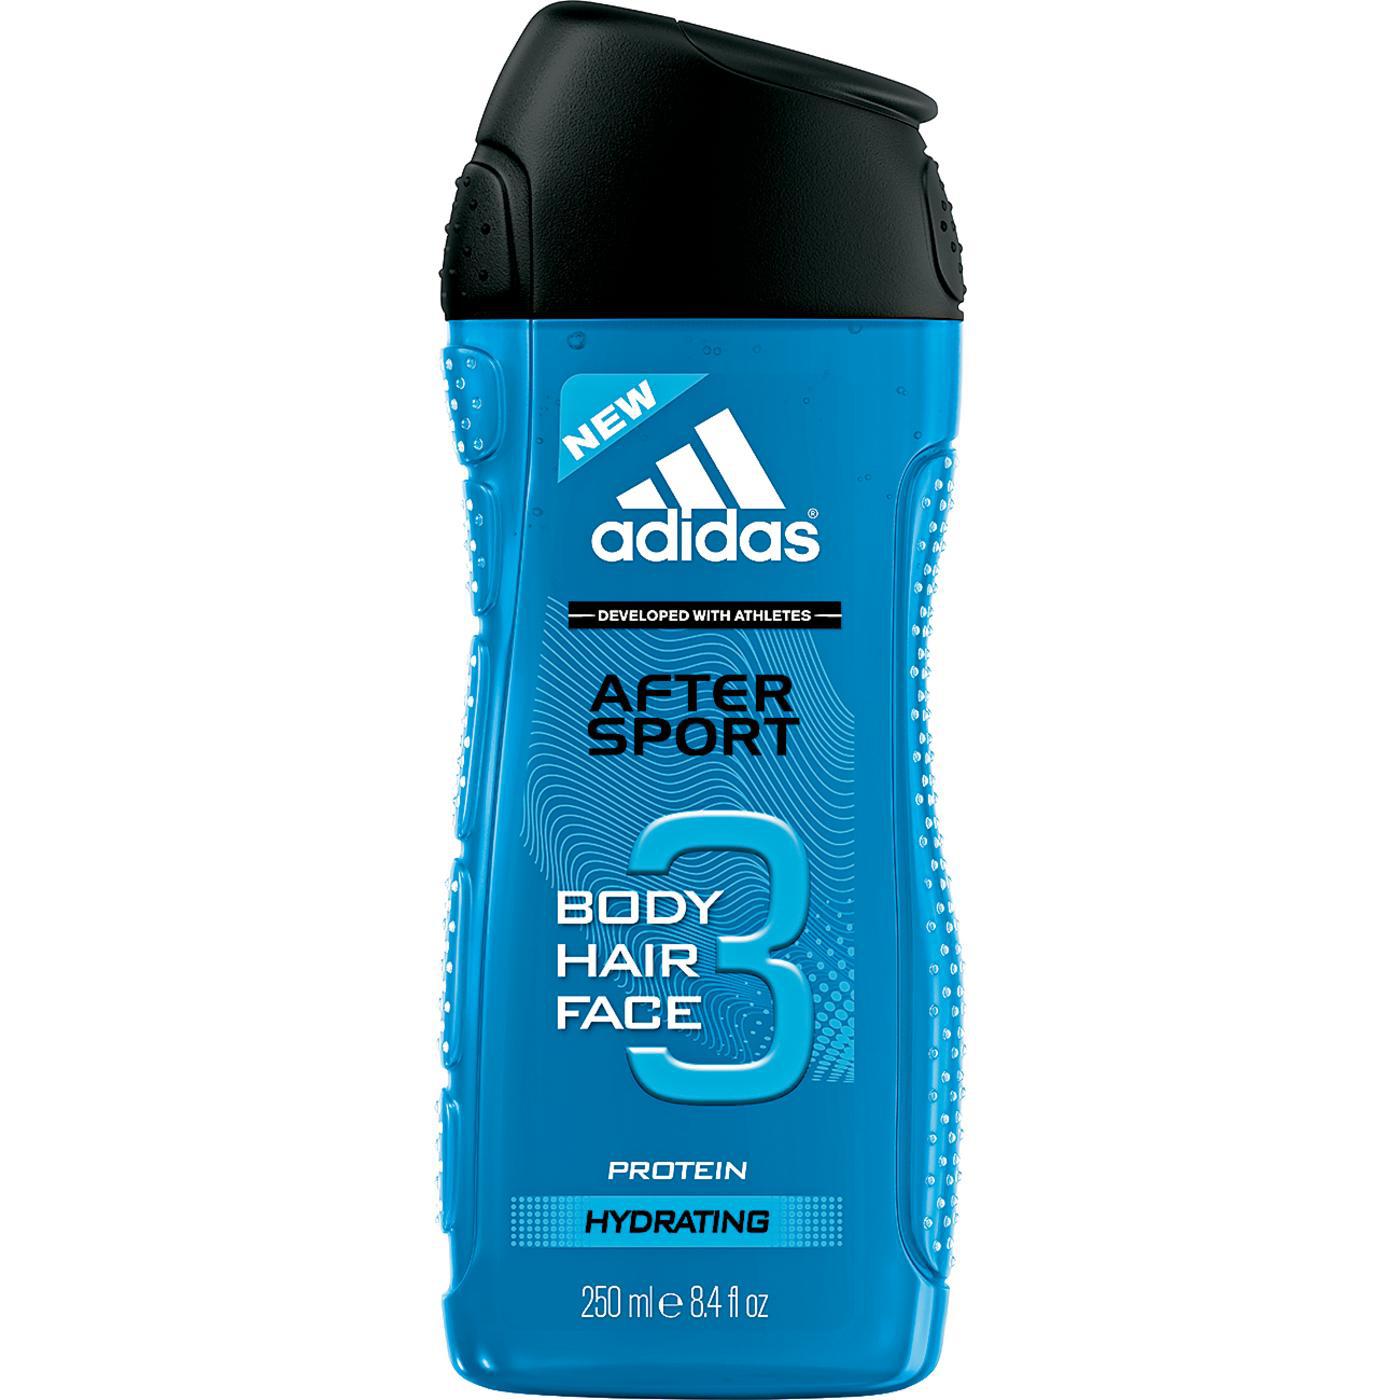 Adidas Men 3in1 Shower Gel - Body Hair Face 